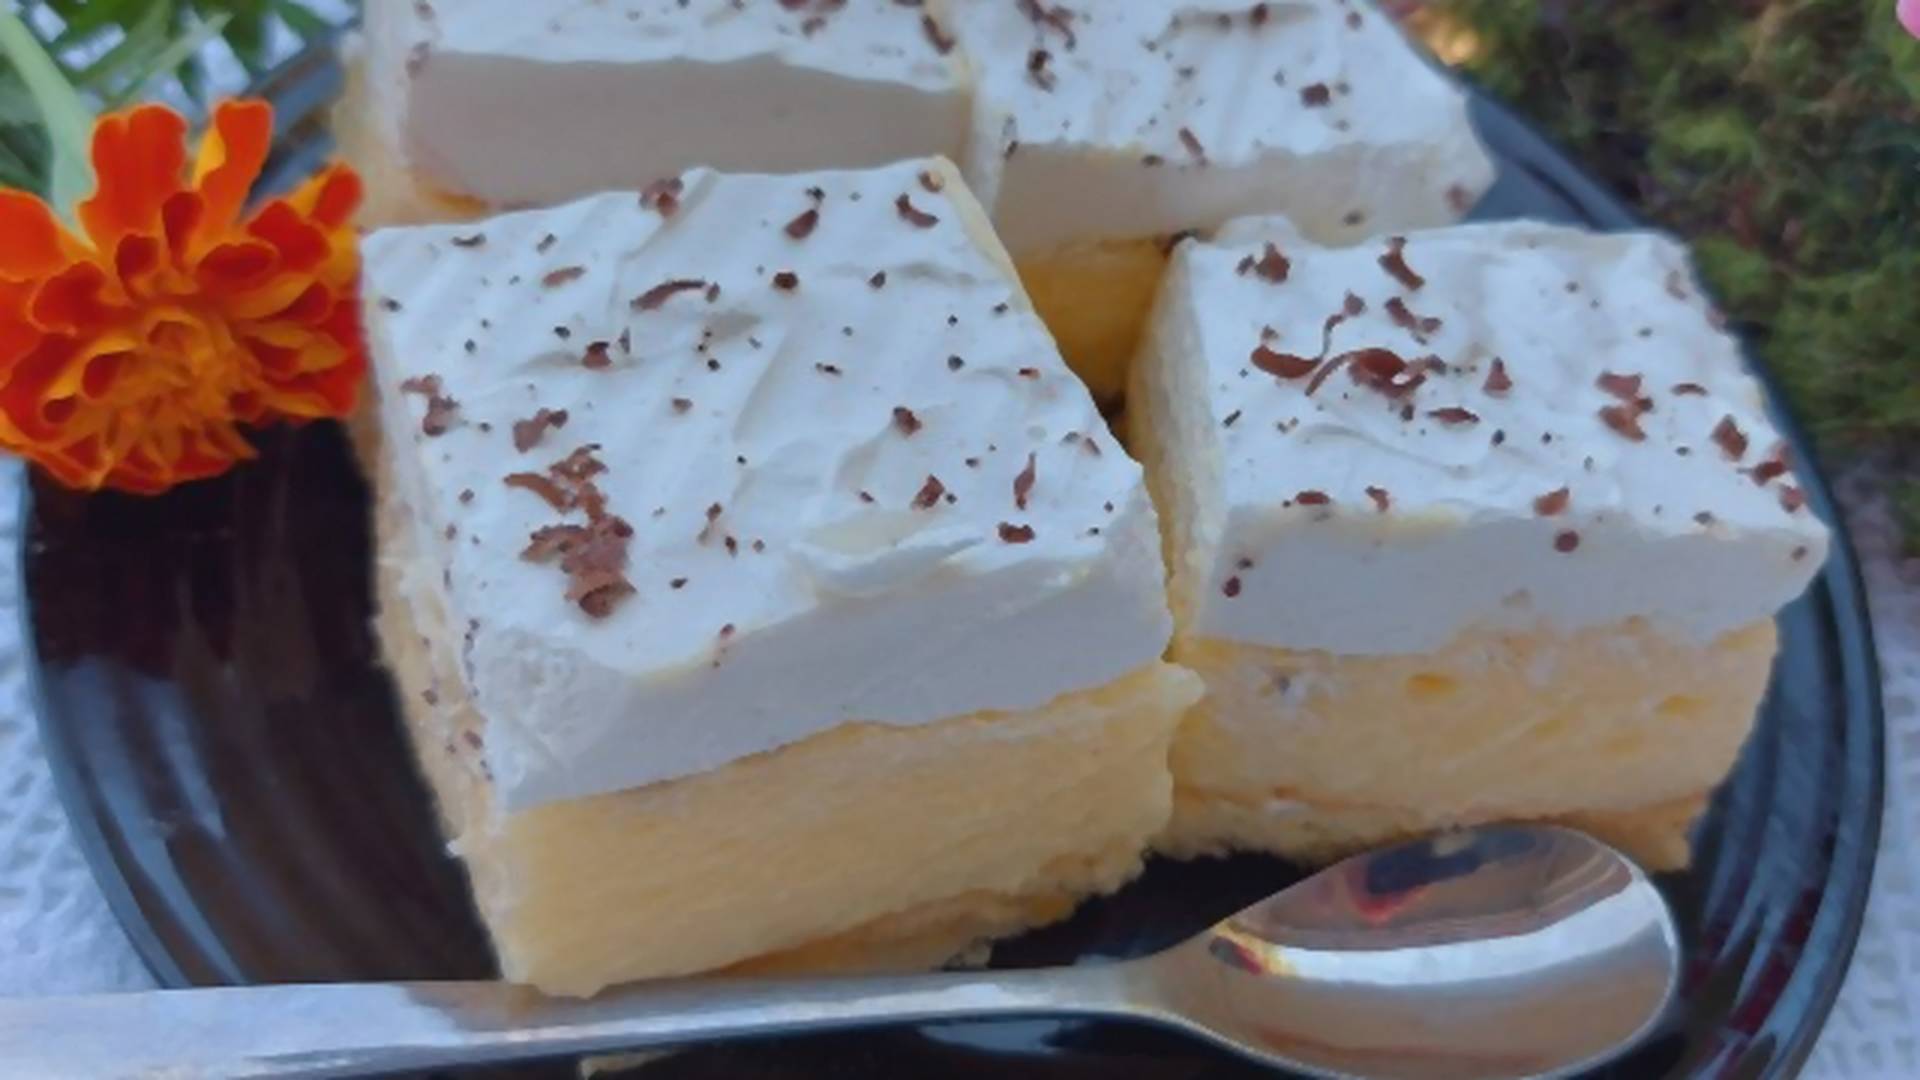 Omiljena srpska baka-food blogerka podelila je svoj recept za najbrže krempite i fenomenalne su